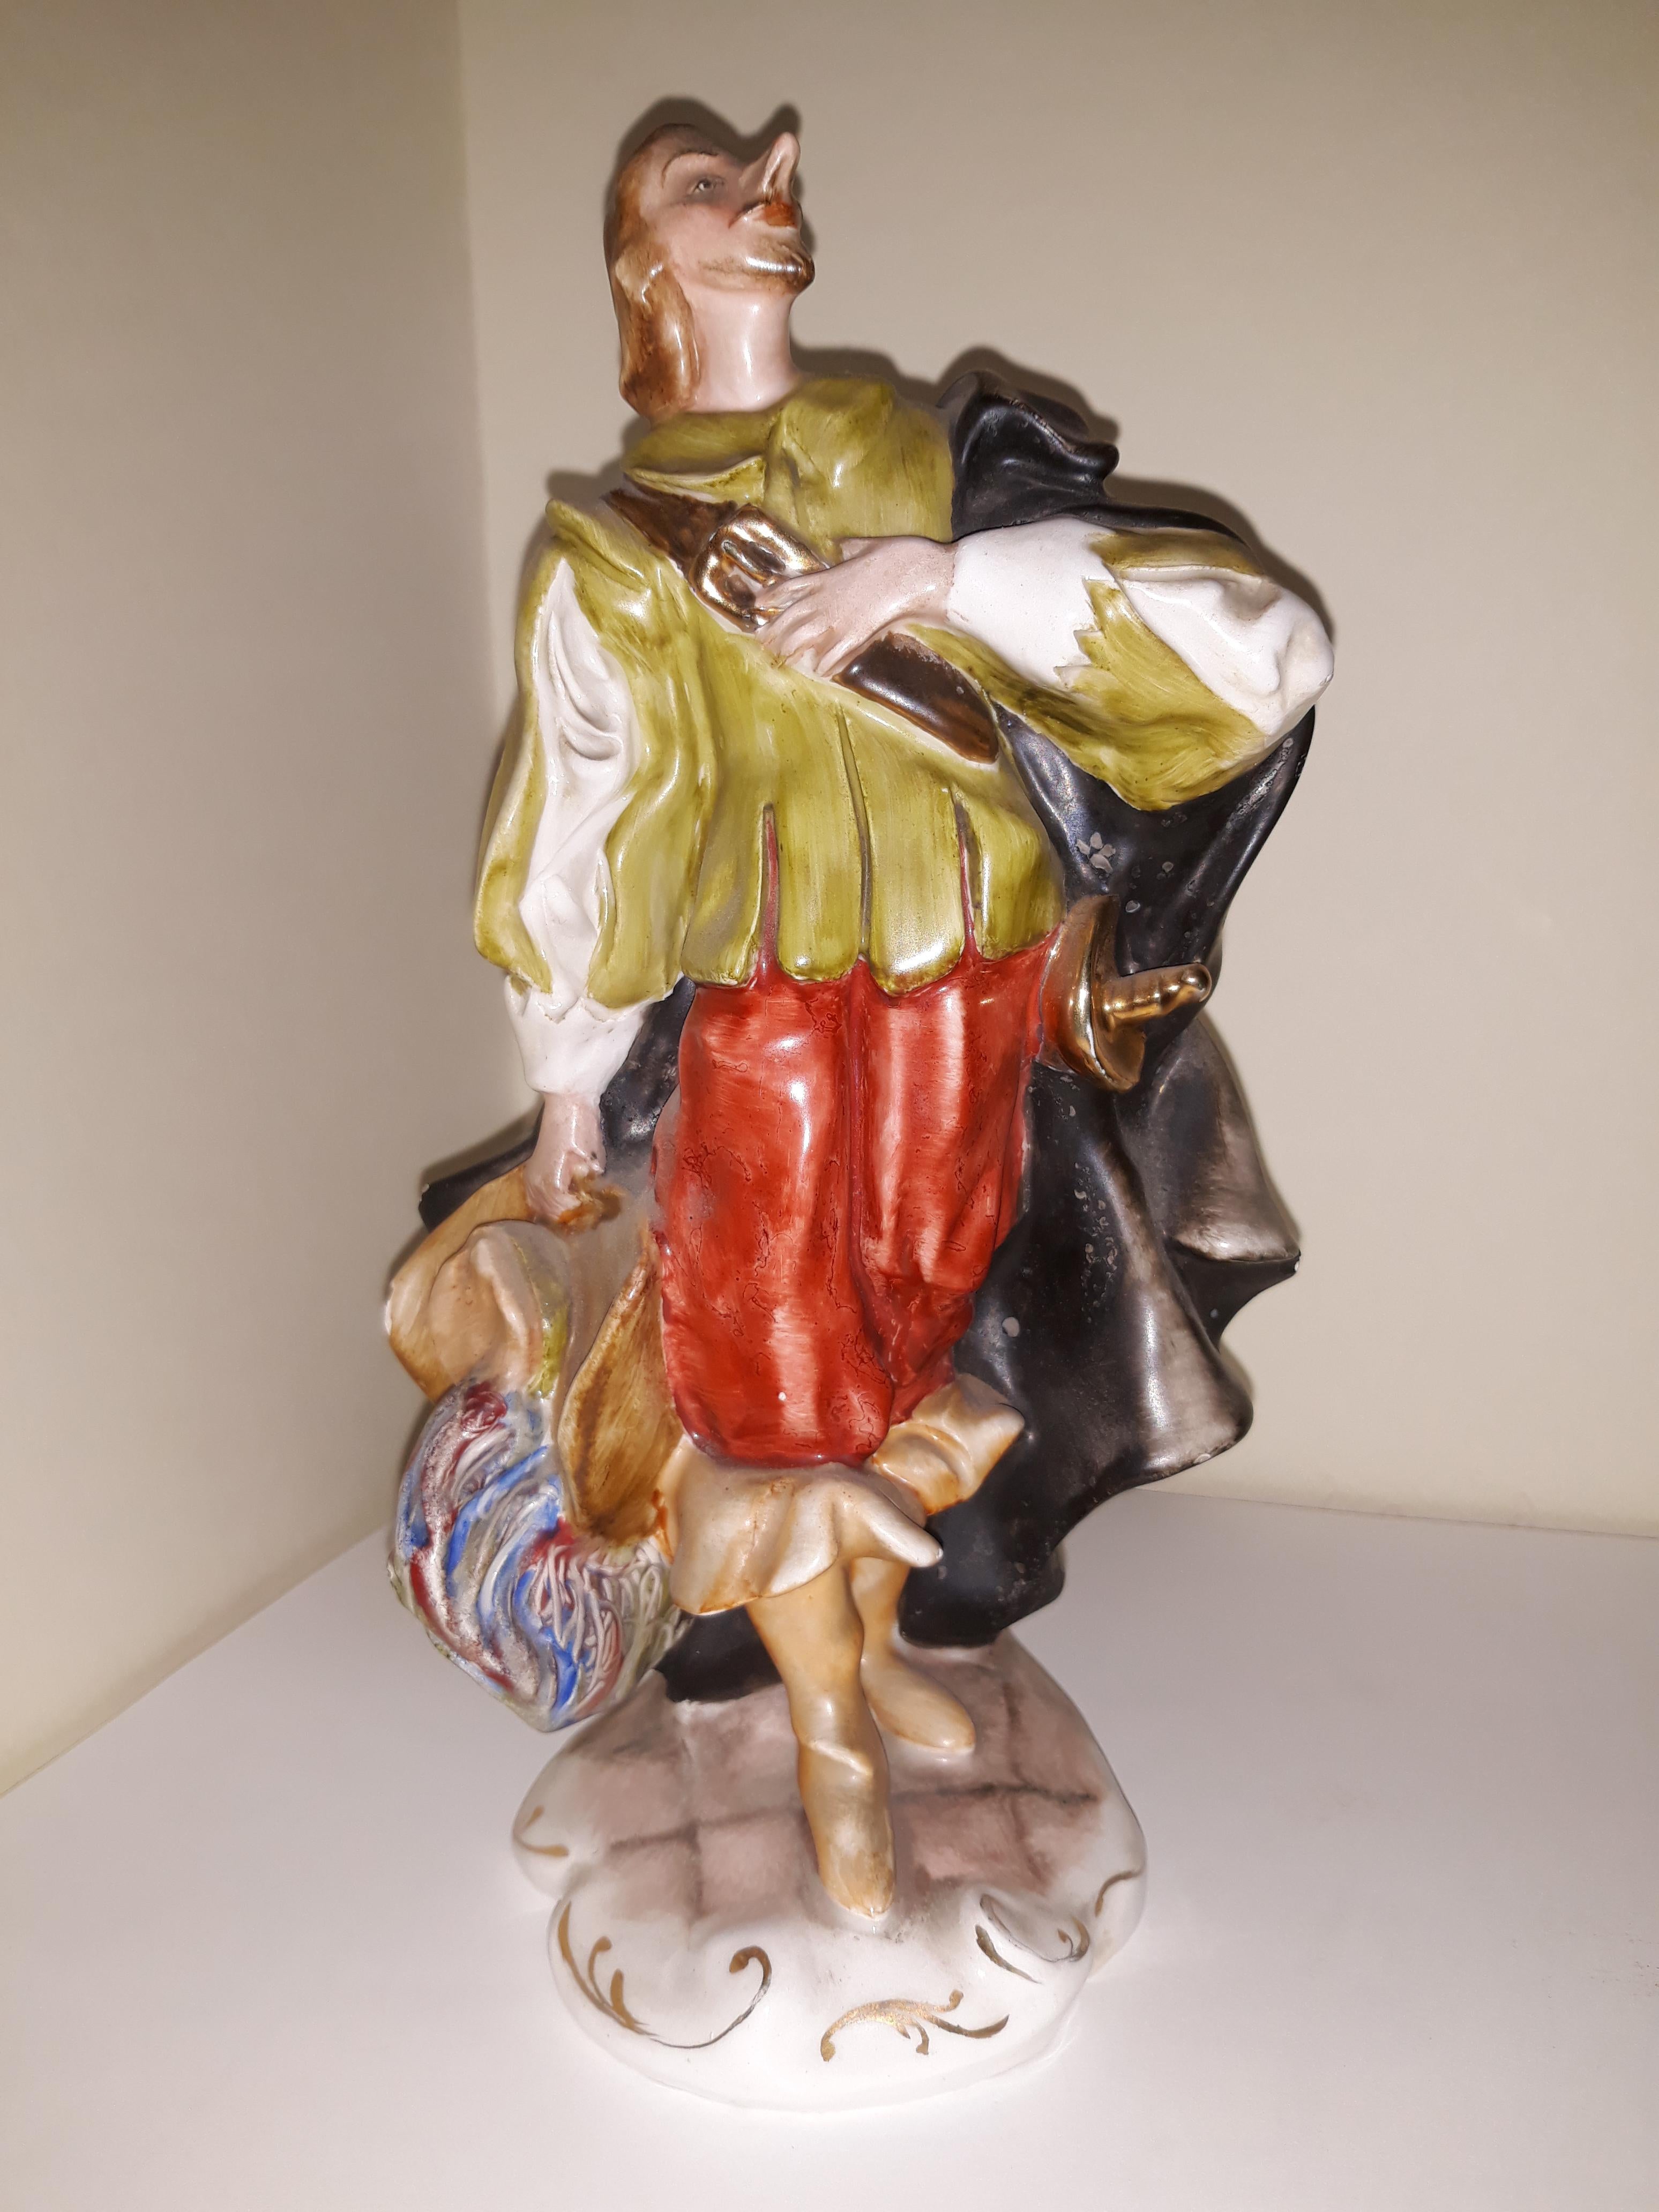 20th century Hannover Porcelain representing figure of Cyrano de Bergerac of Rostand.
